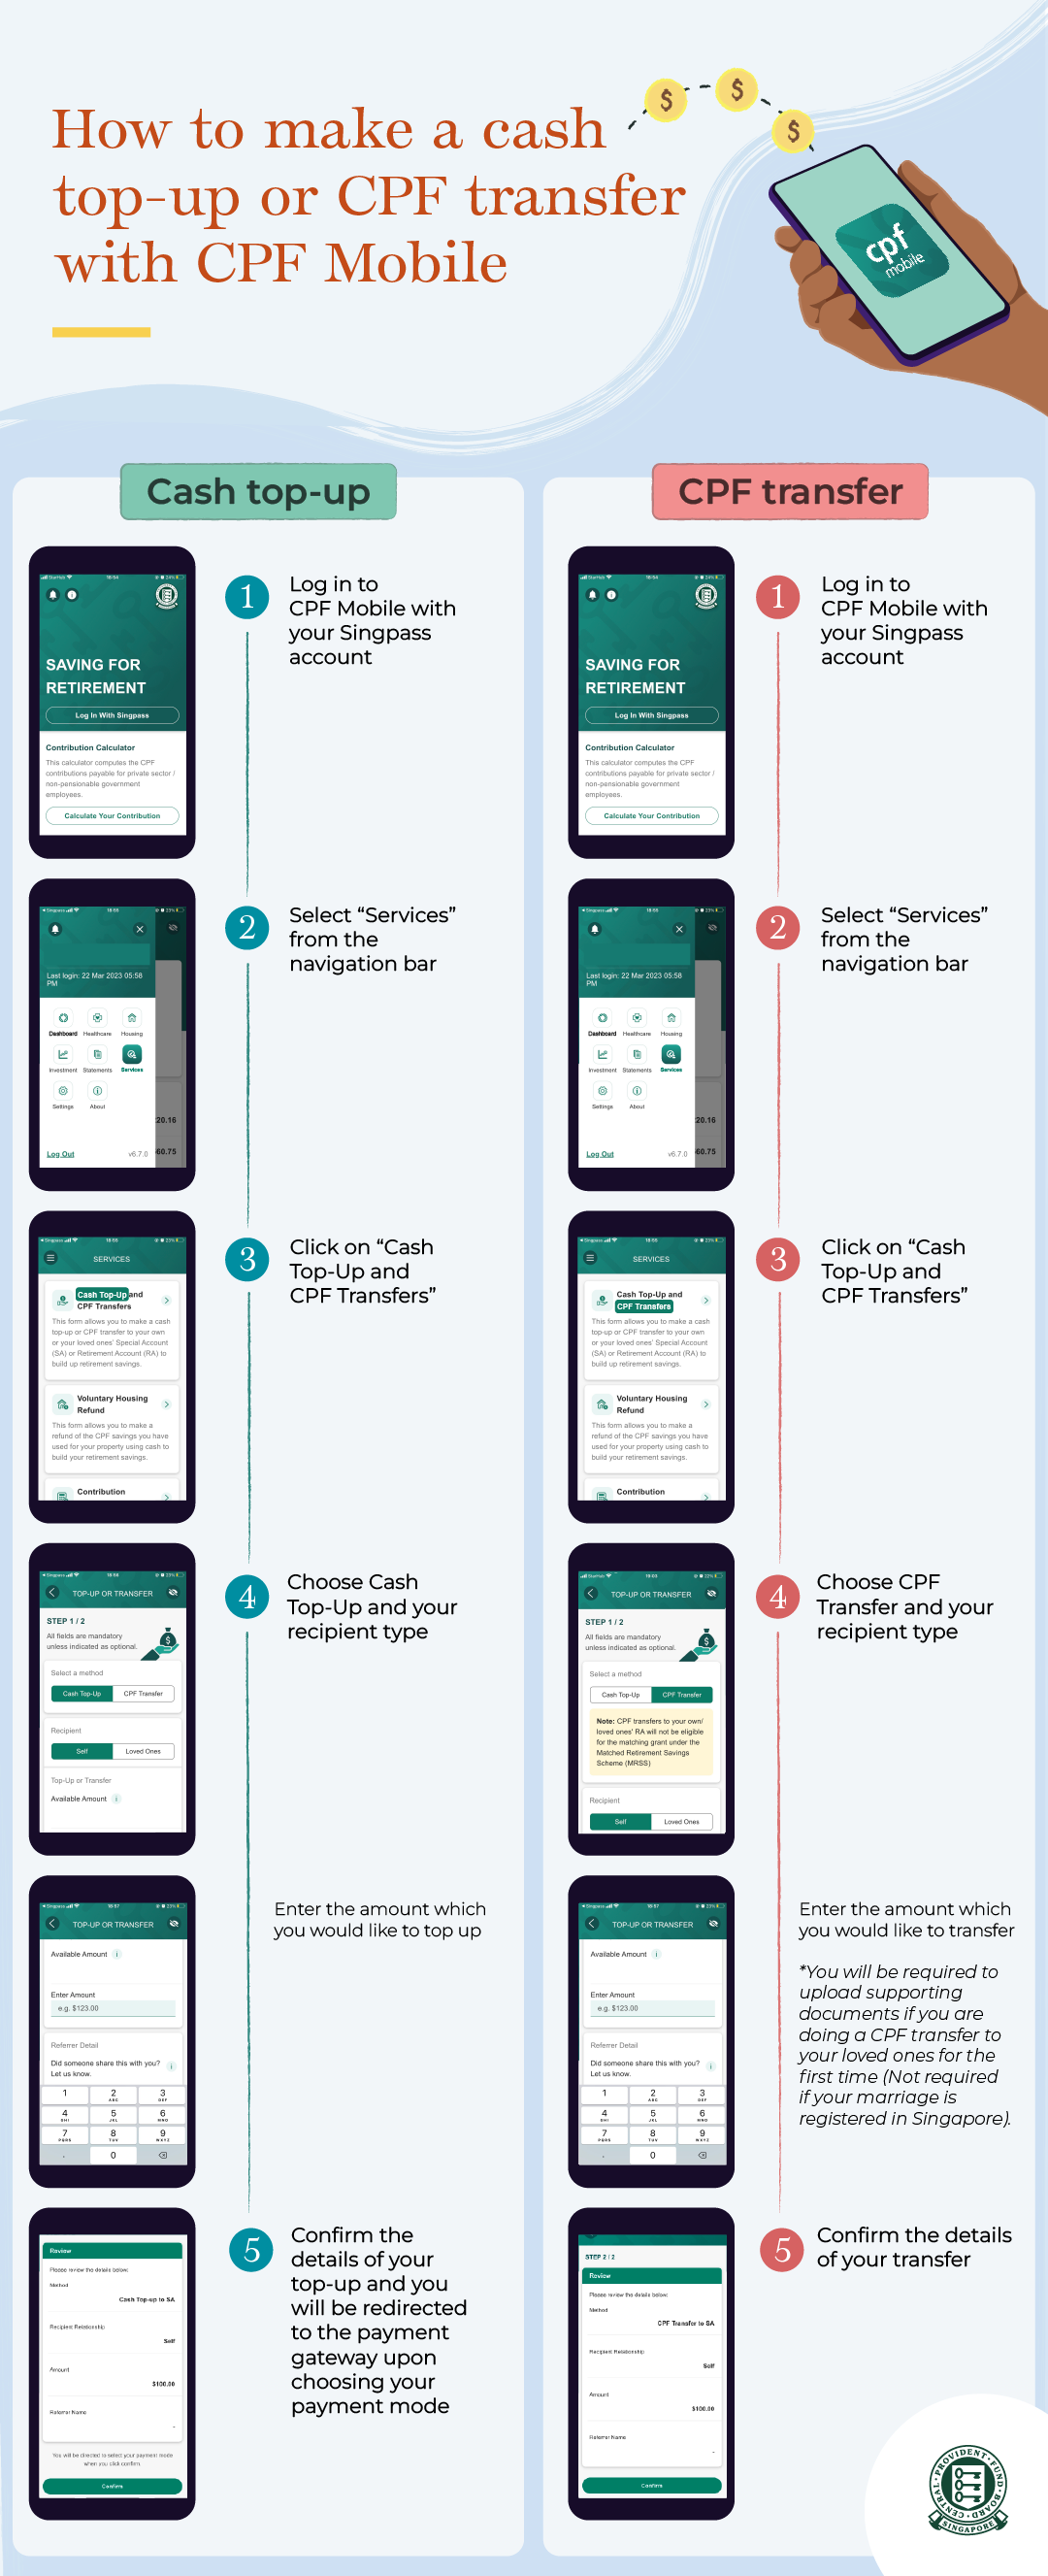 How to do a cash top-up or CPF transfer via CPF Mobile